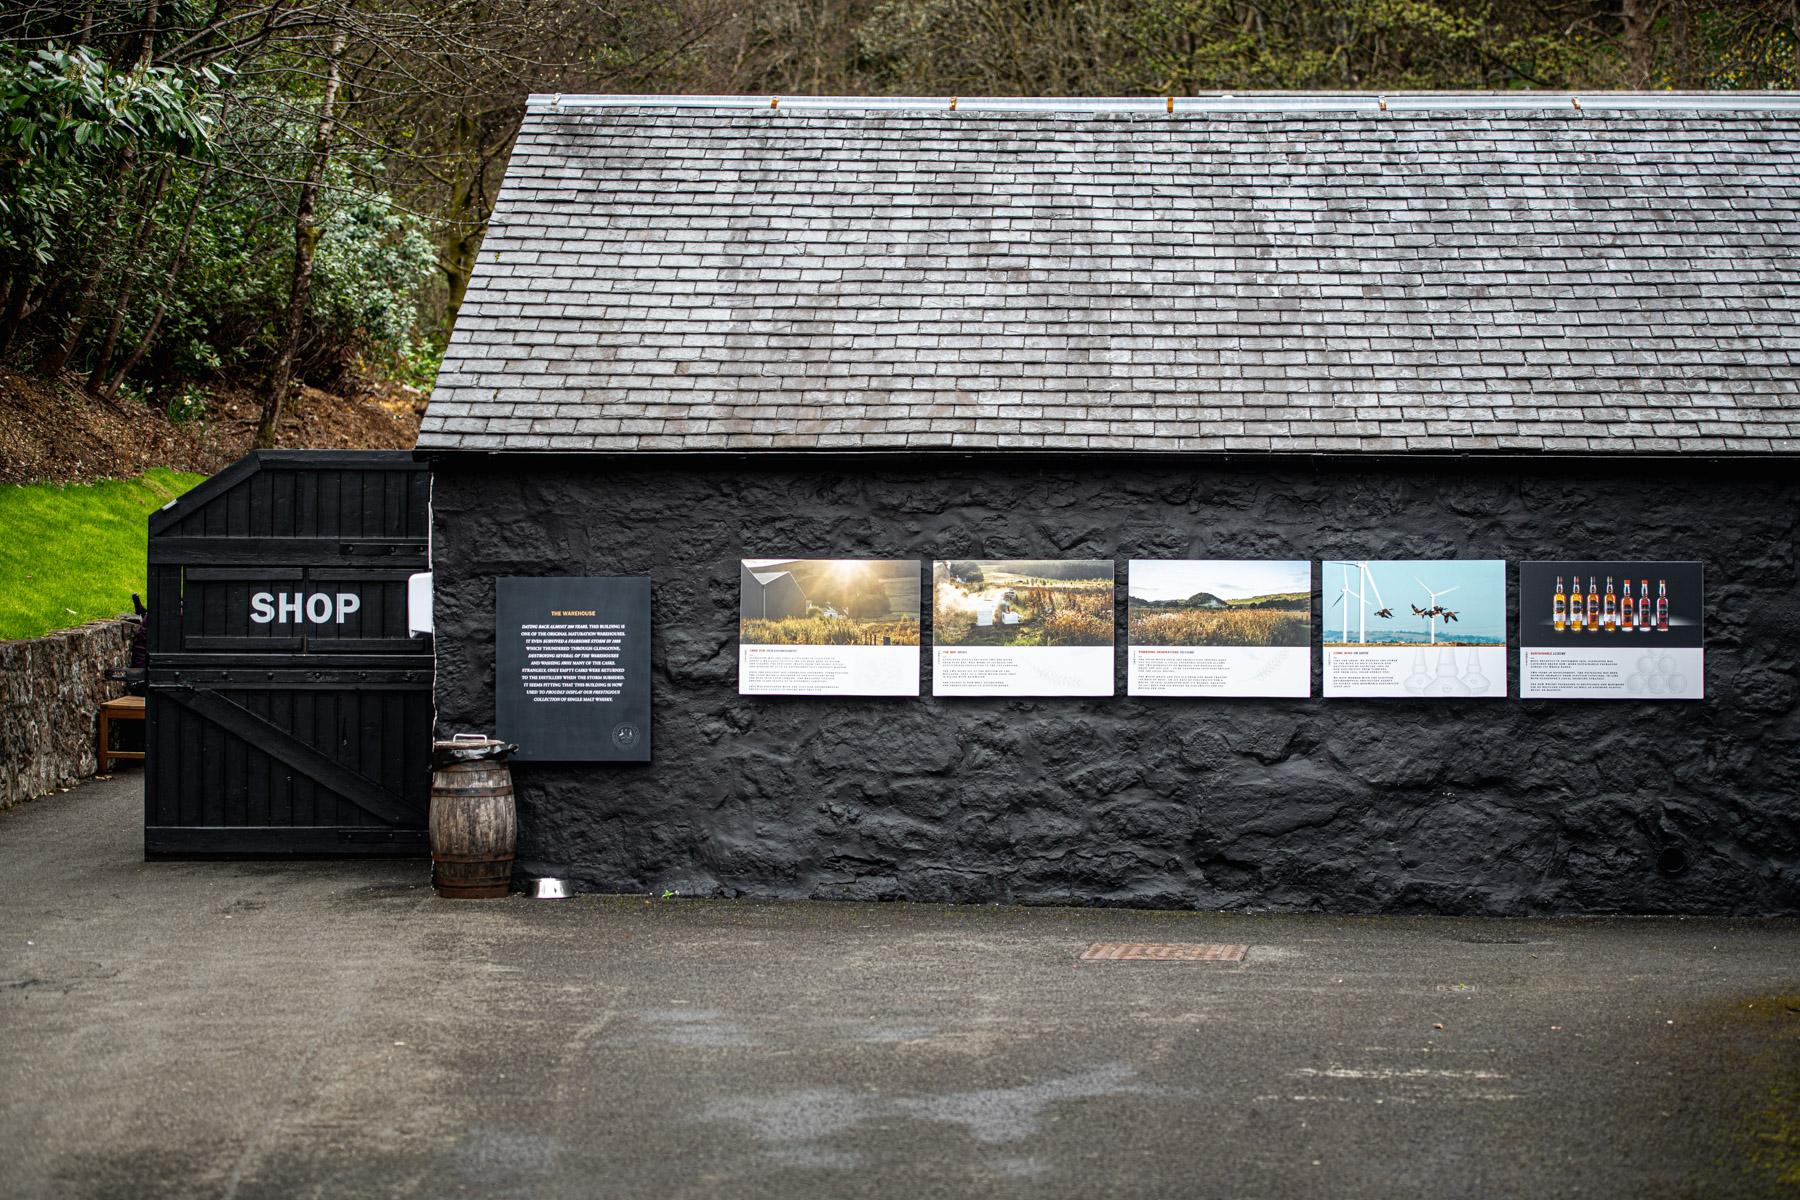 Glengoyne whisky distillery brand home building exterior 